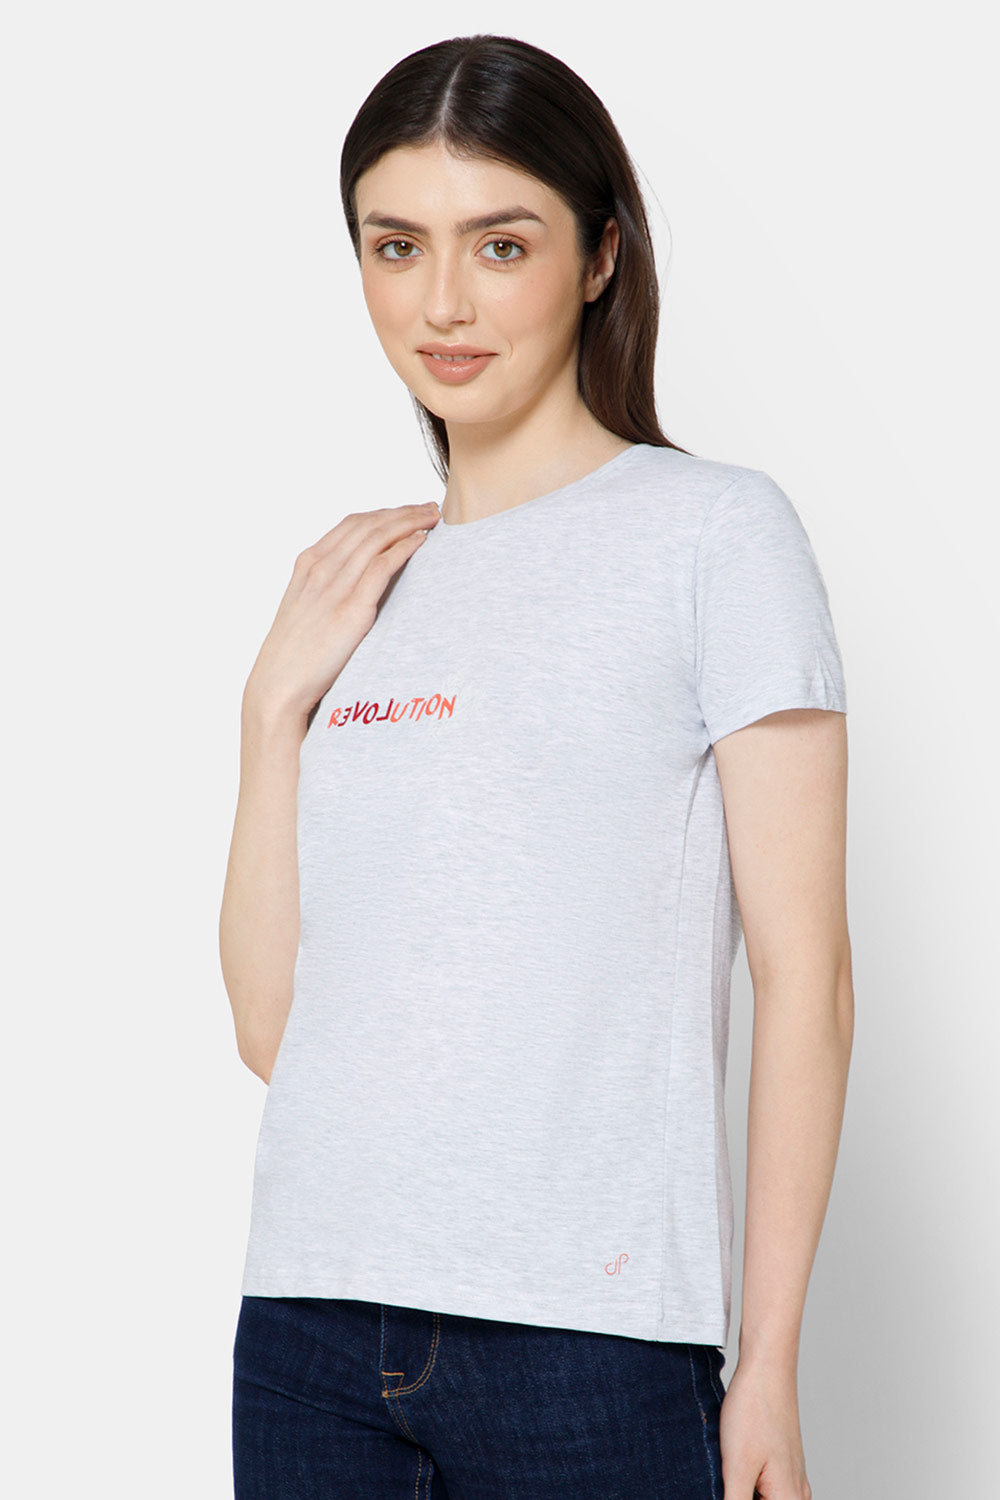 Jusperf Women's Printed Crew Neck Casual T-Shirt - Grey - TS32